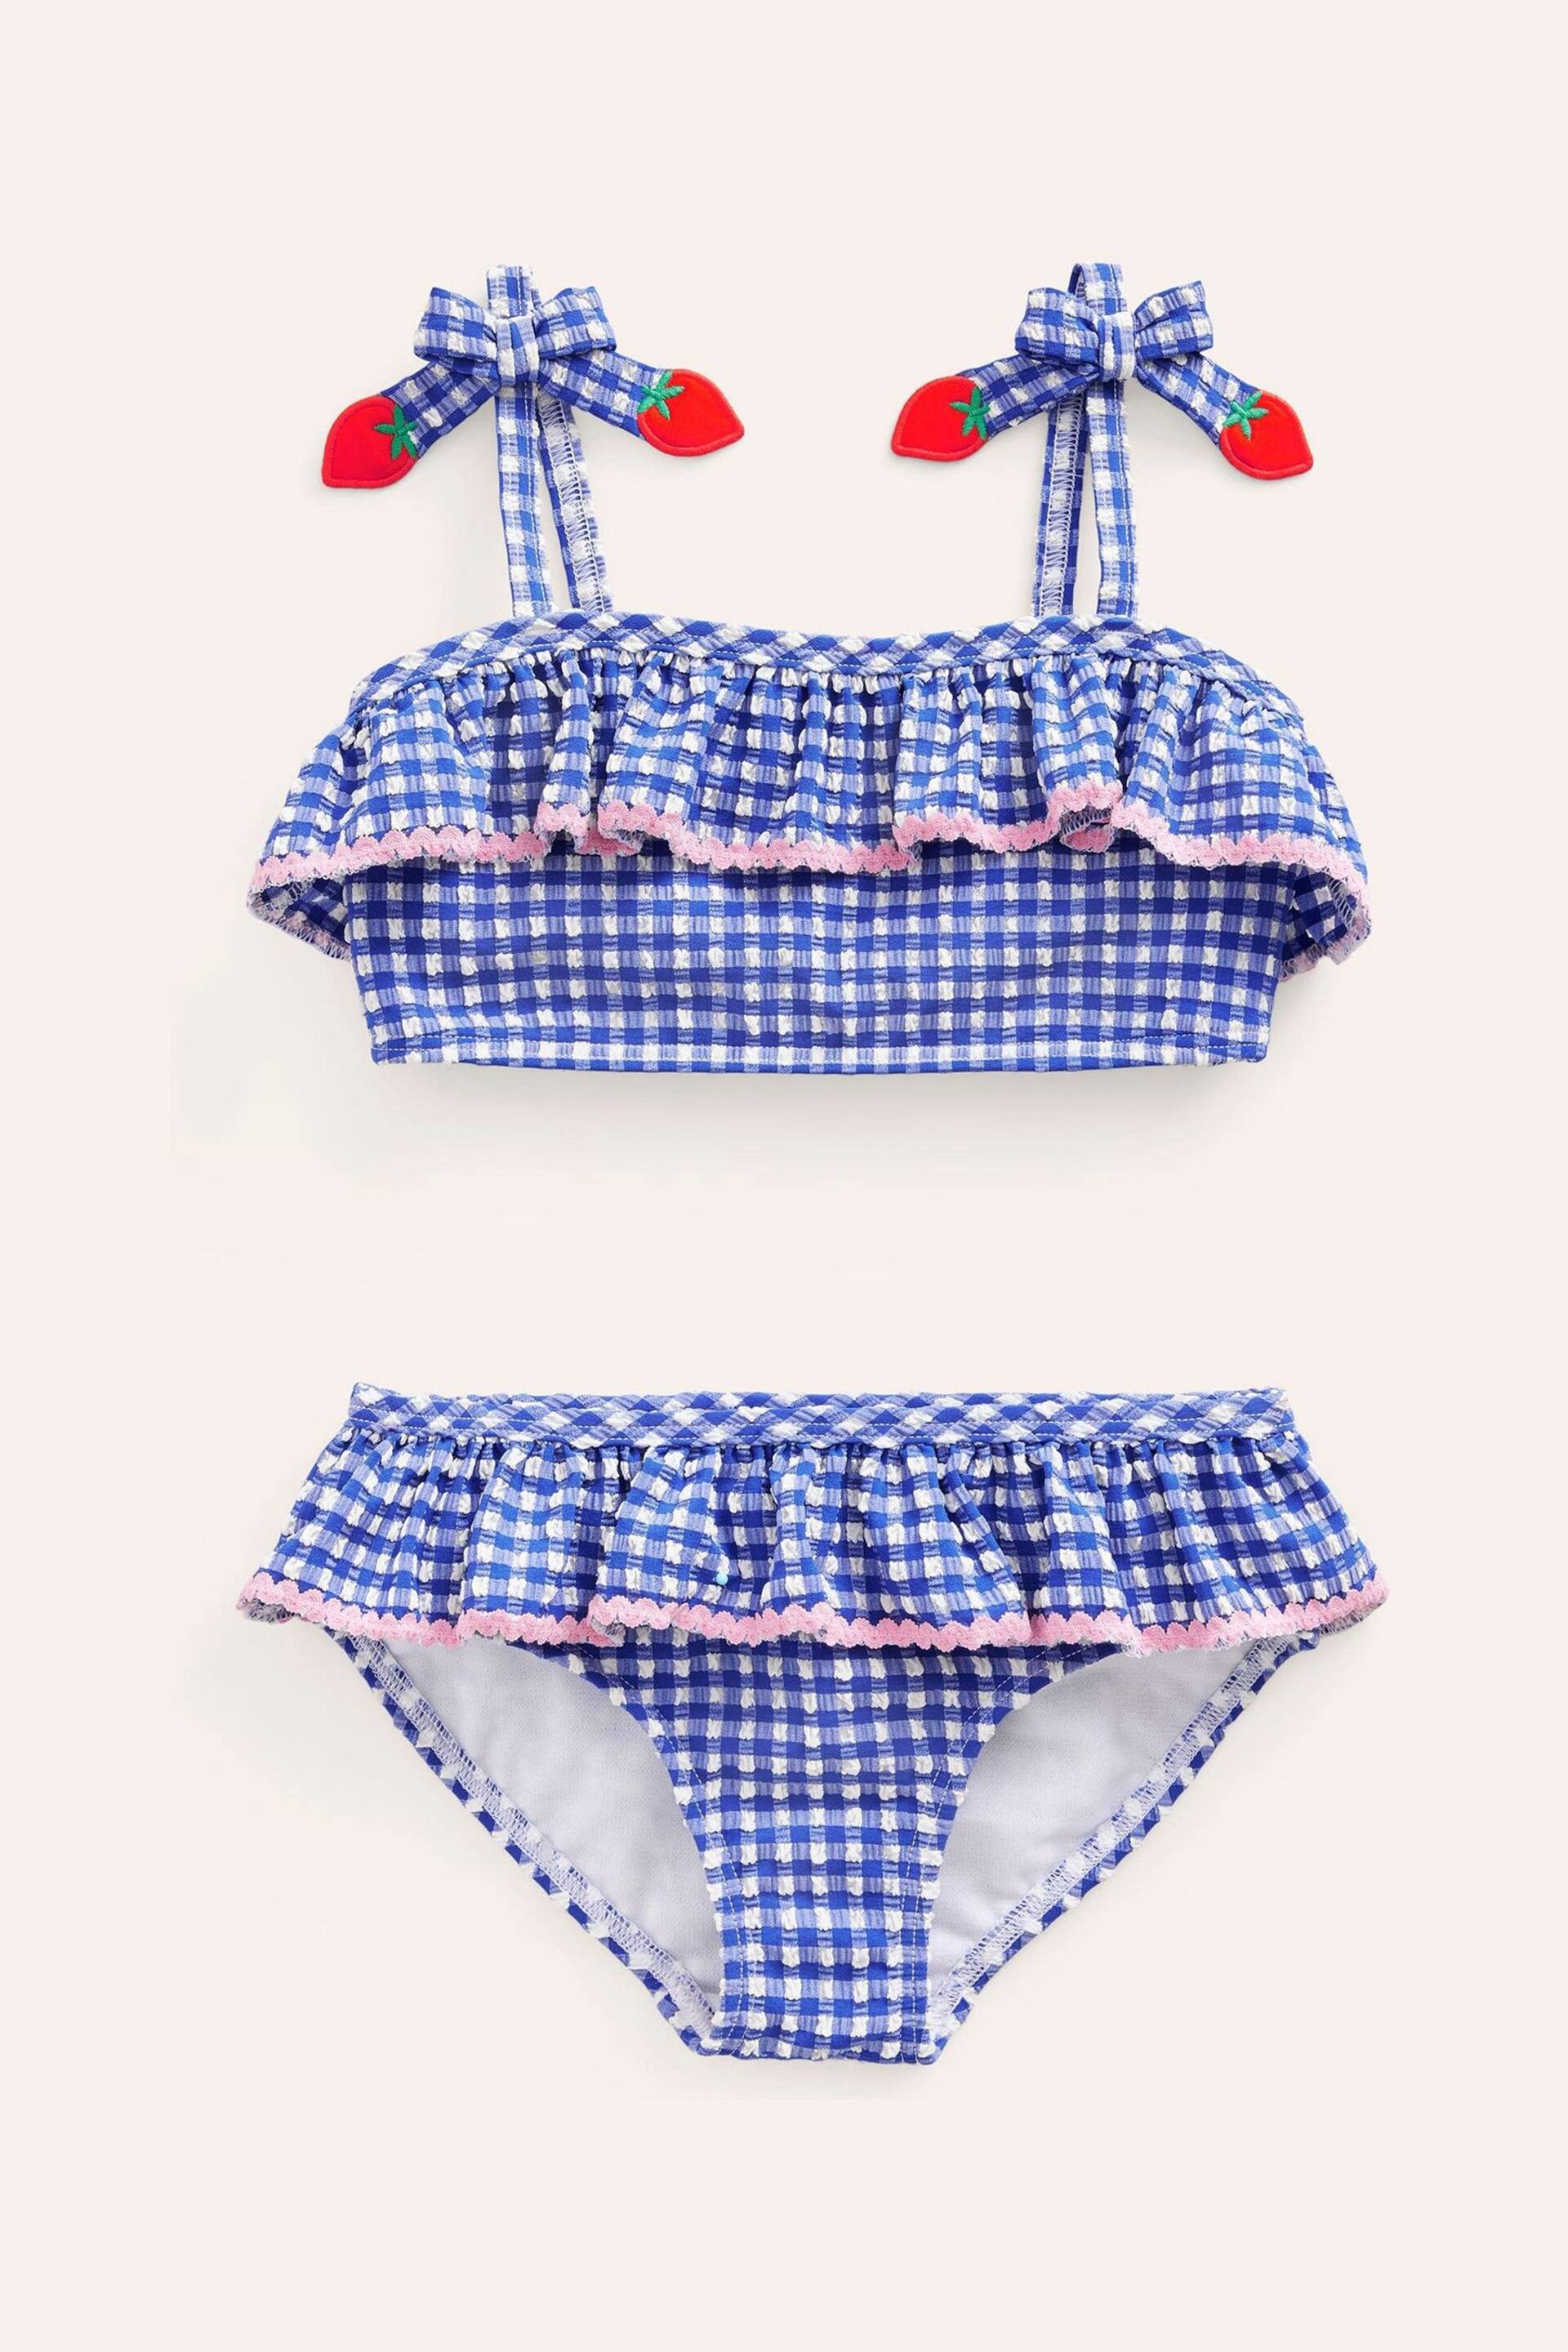 Boden Blue Cherry Seersucker Frilly Bikini - Image 2 of 4